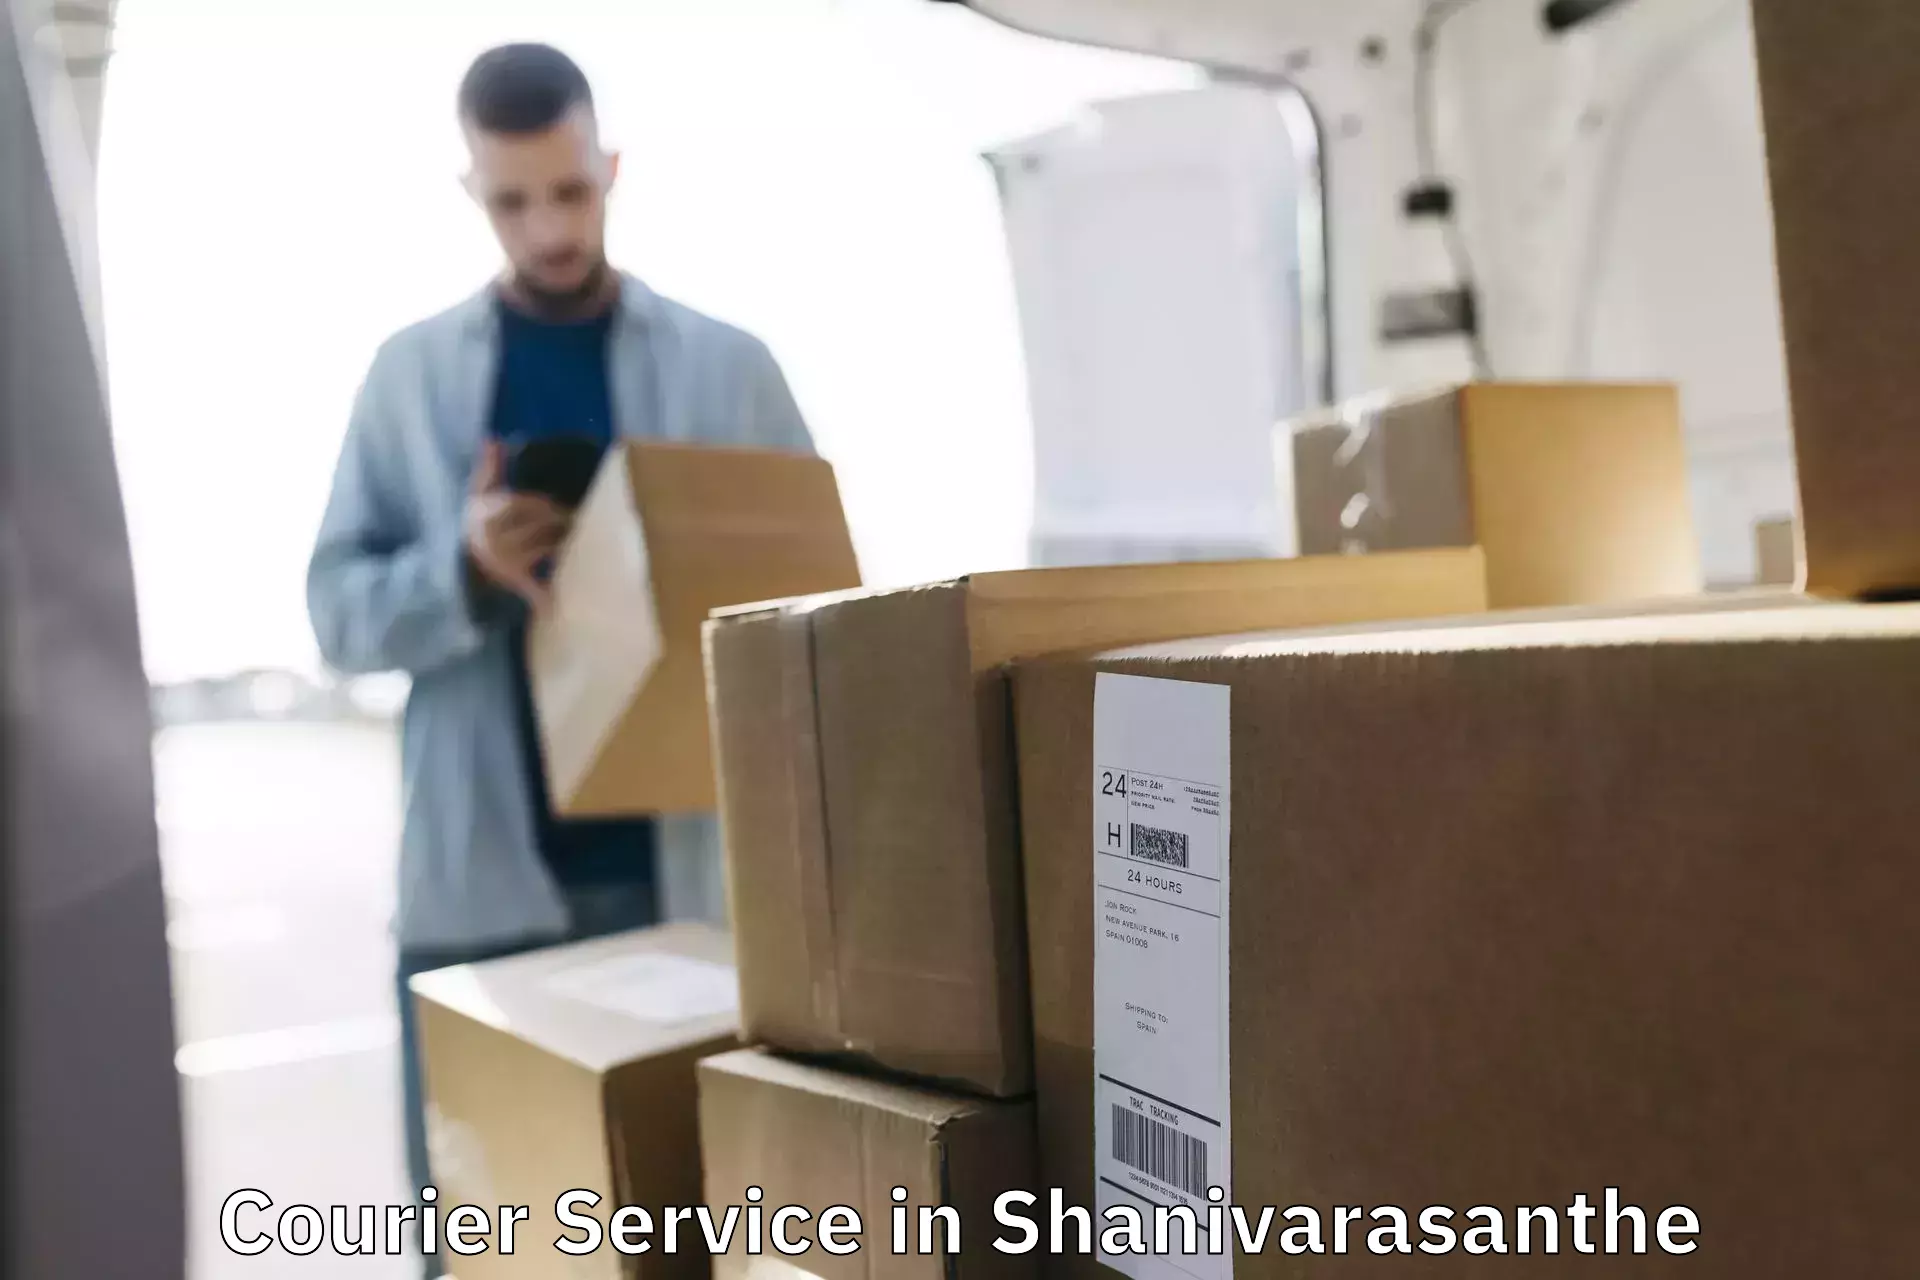 Courier service comparison in Shanivarasanthe